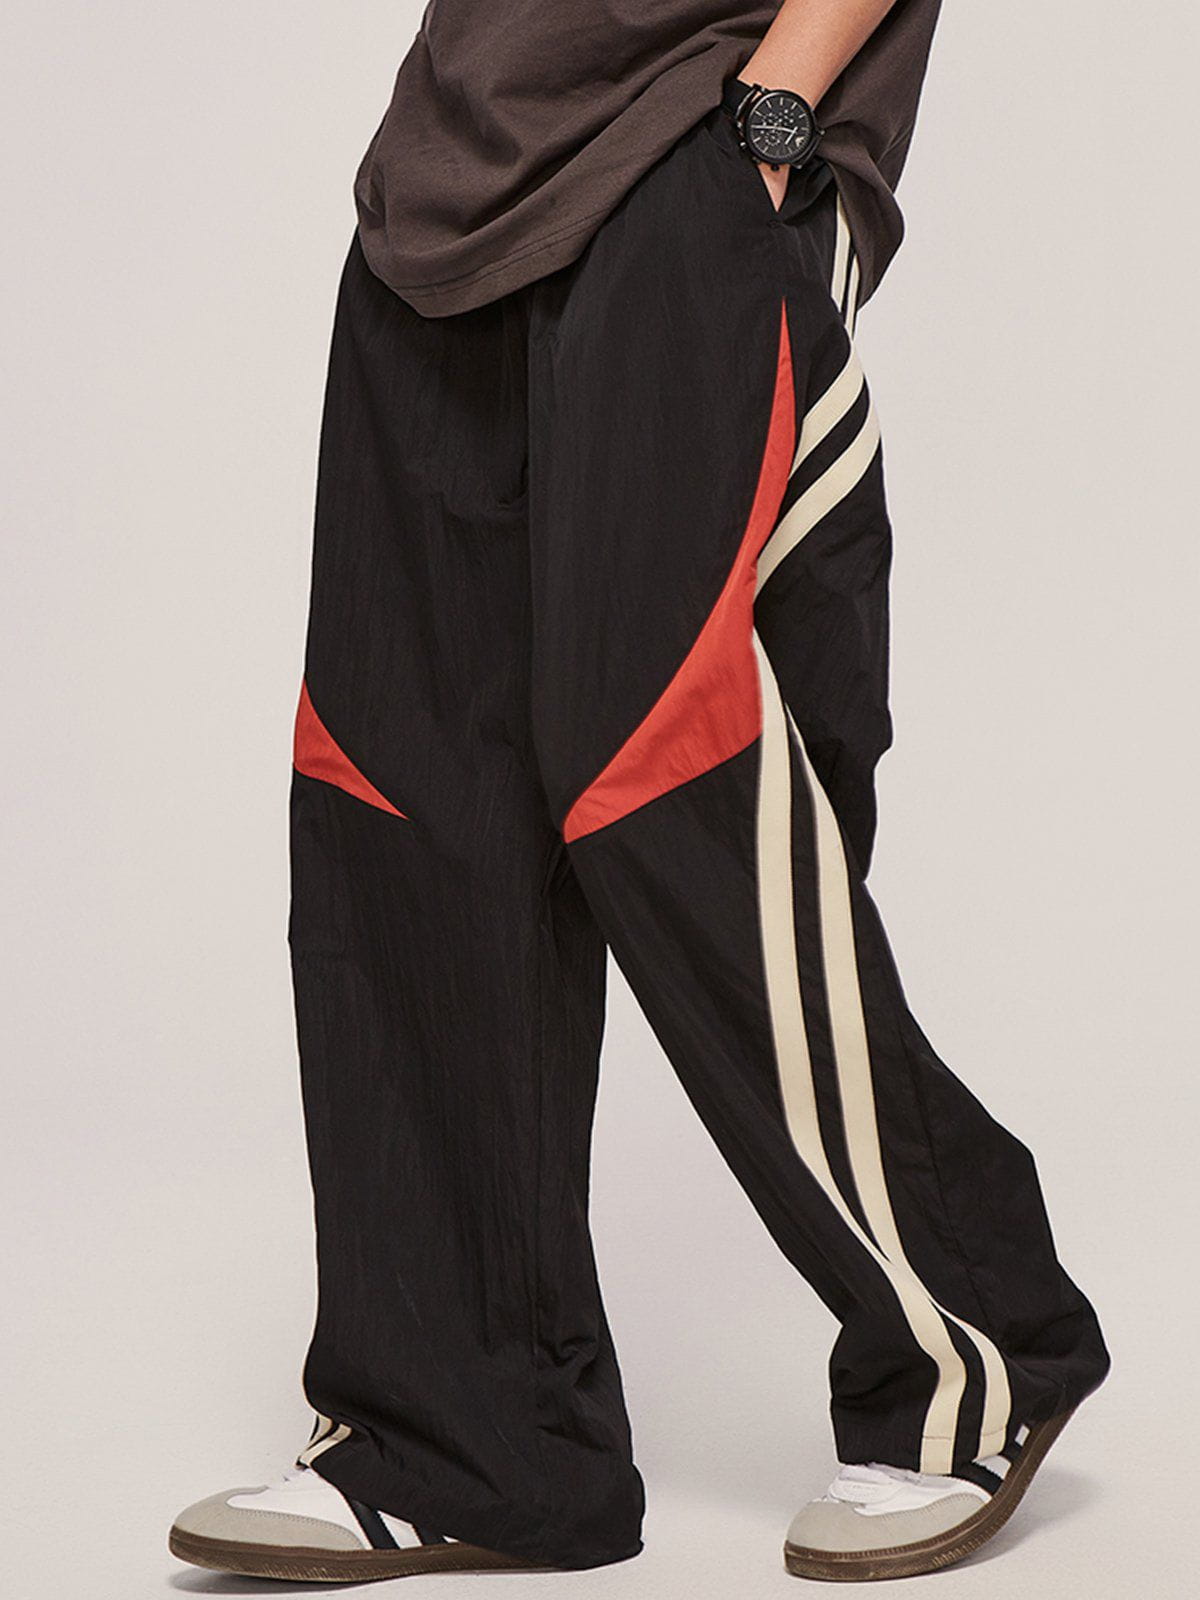 Majesda® - Vintage Oblique Stripe Sweatpants outfit ideas streetwear fashion